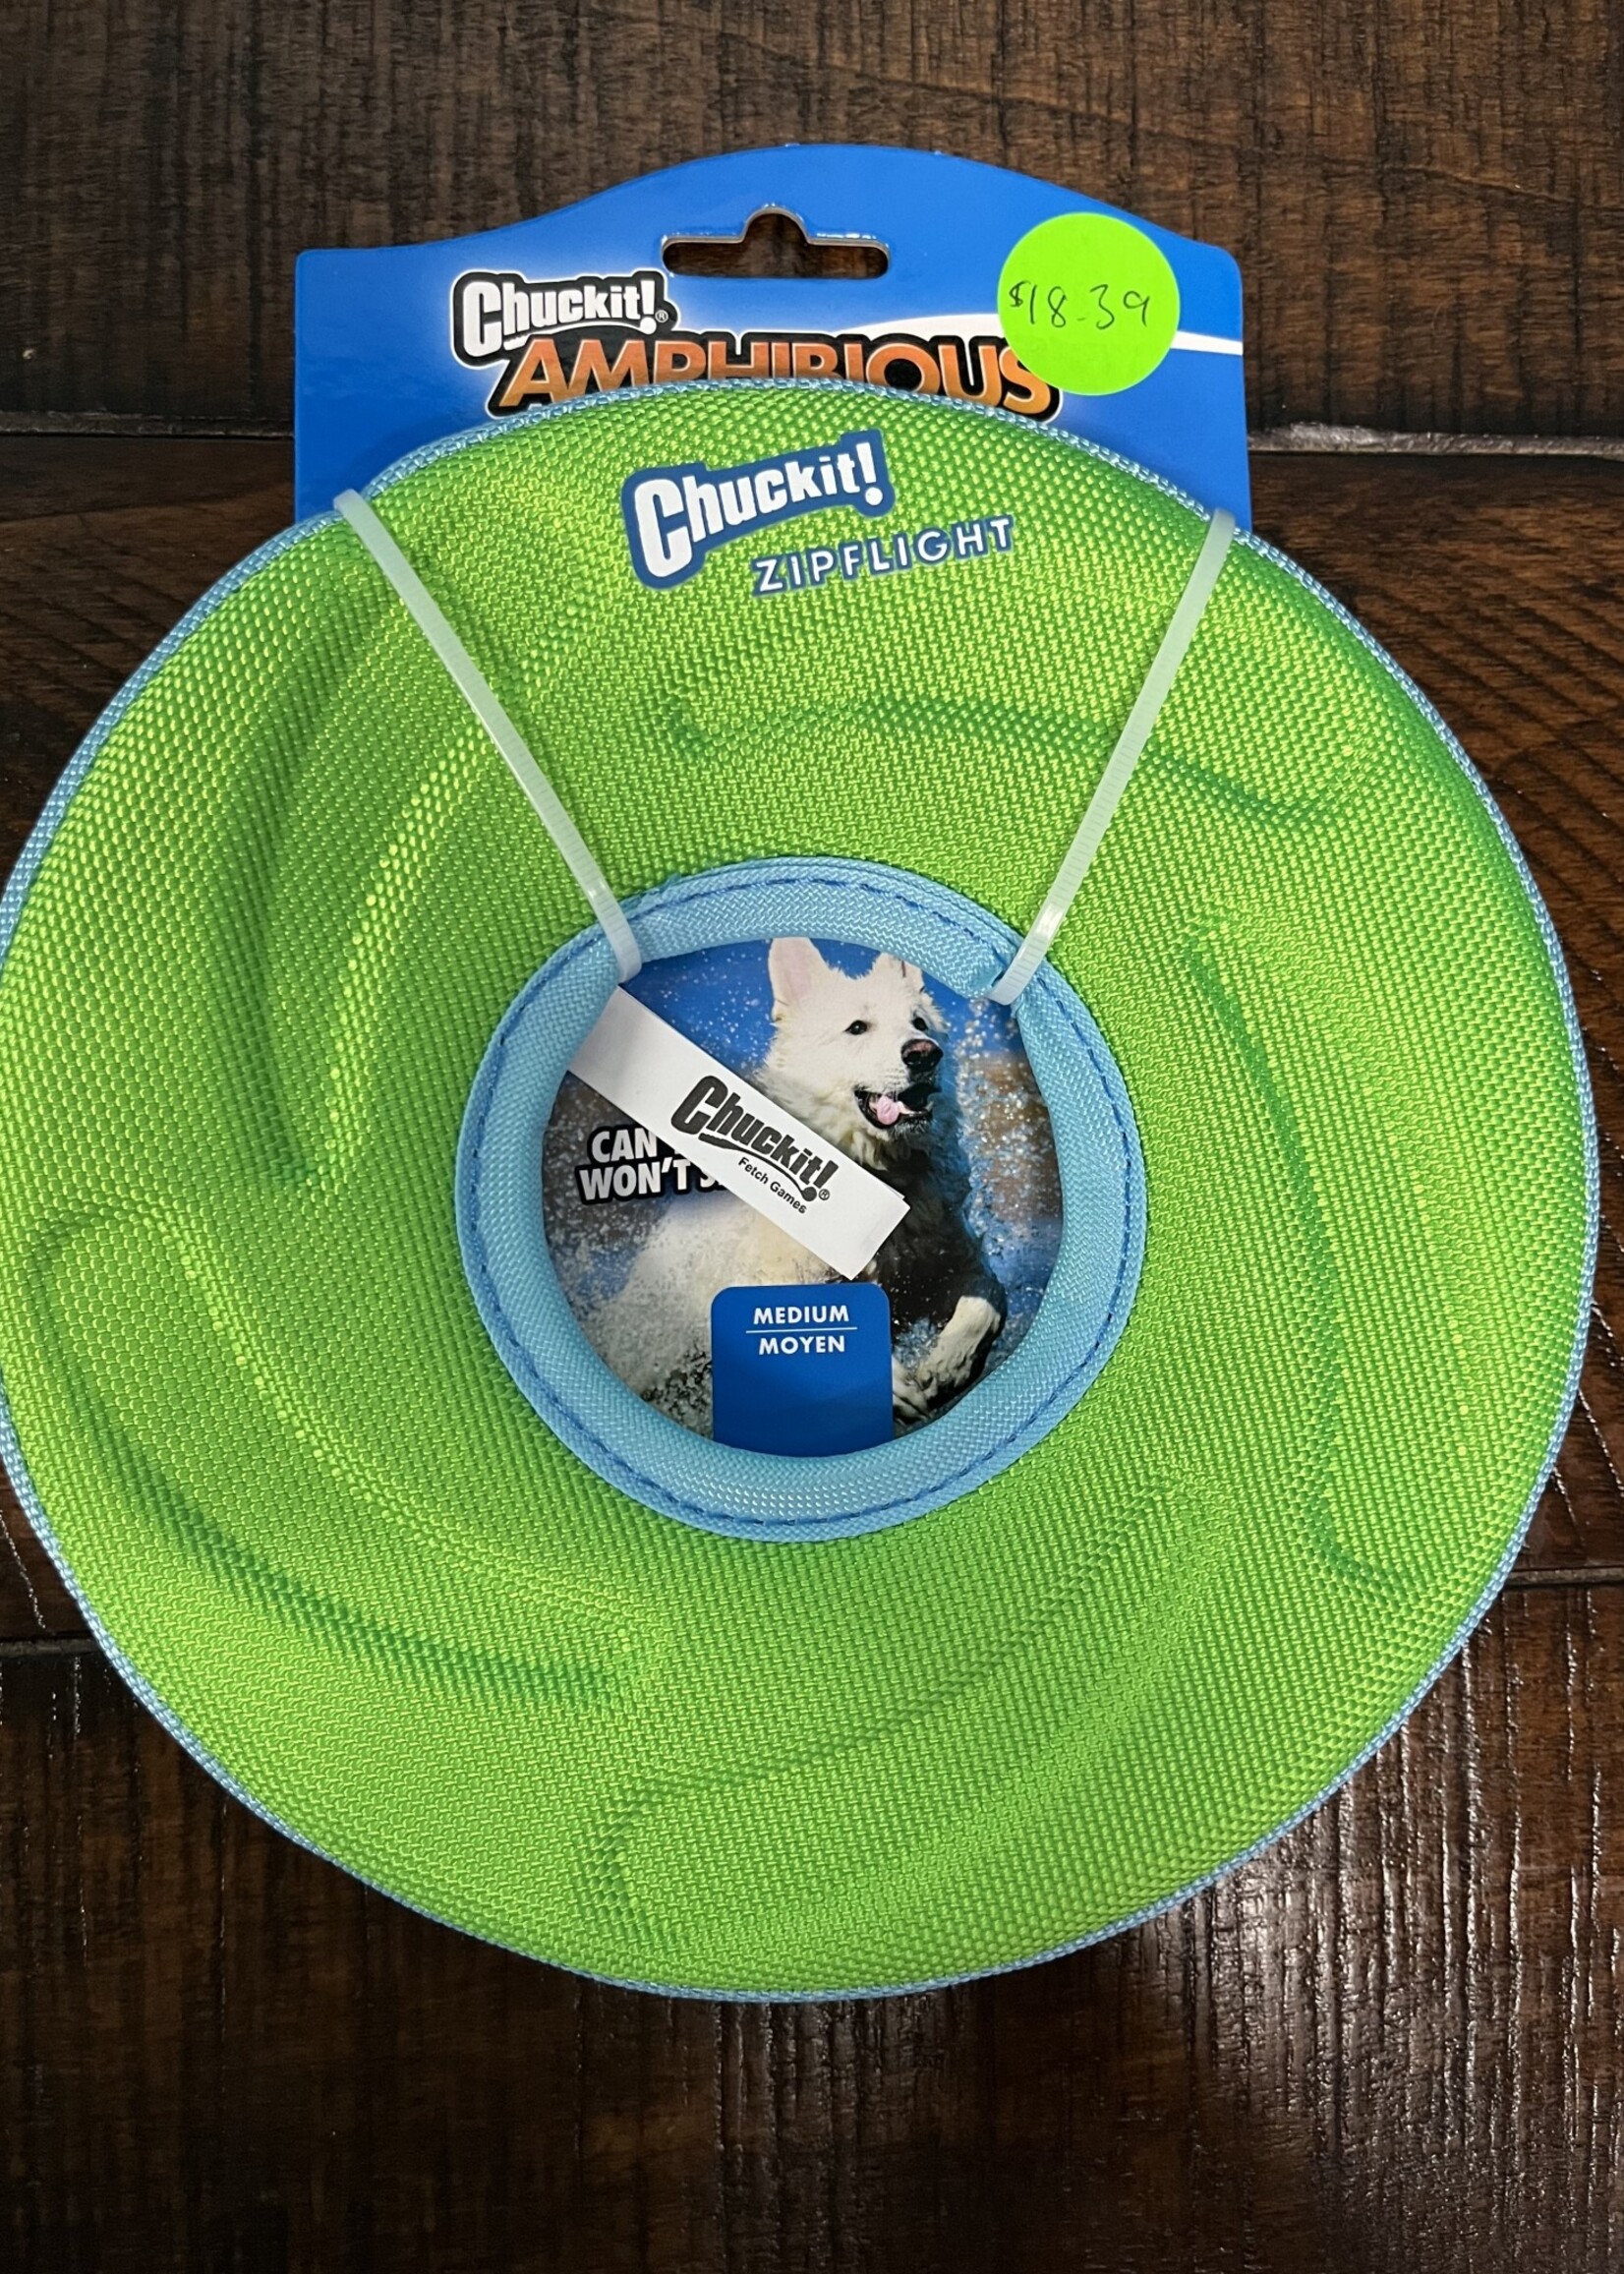 Chuckit Amphibious Zip Flight Frisbee Medium